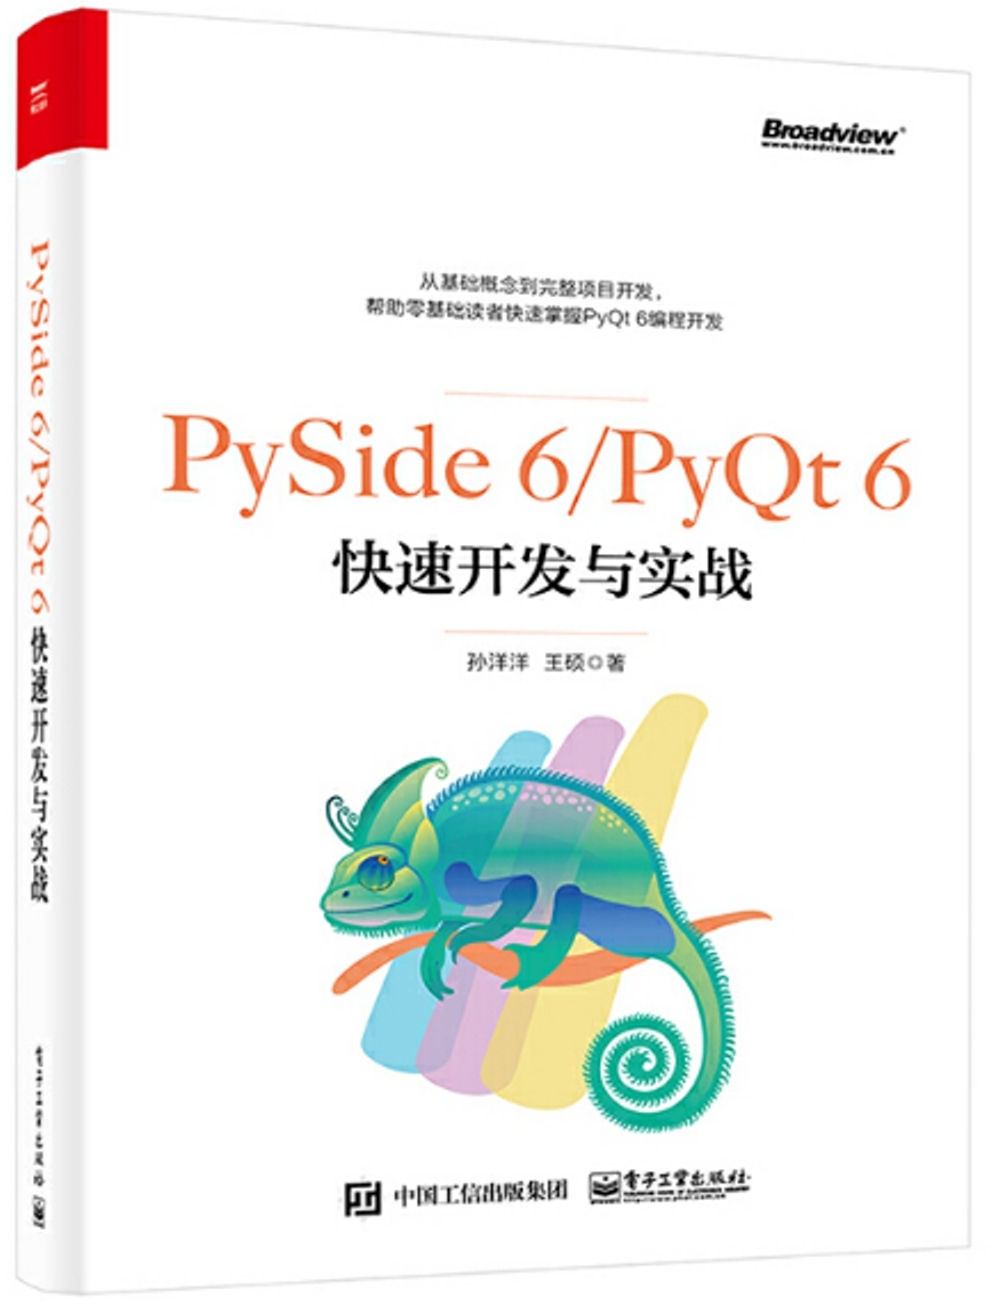 PySide 6/PyQt 6快速開發與實戰